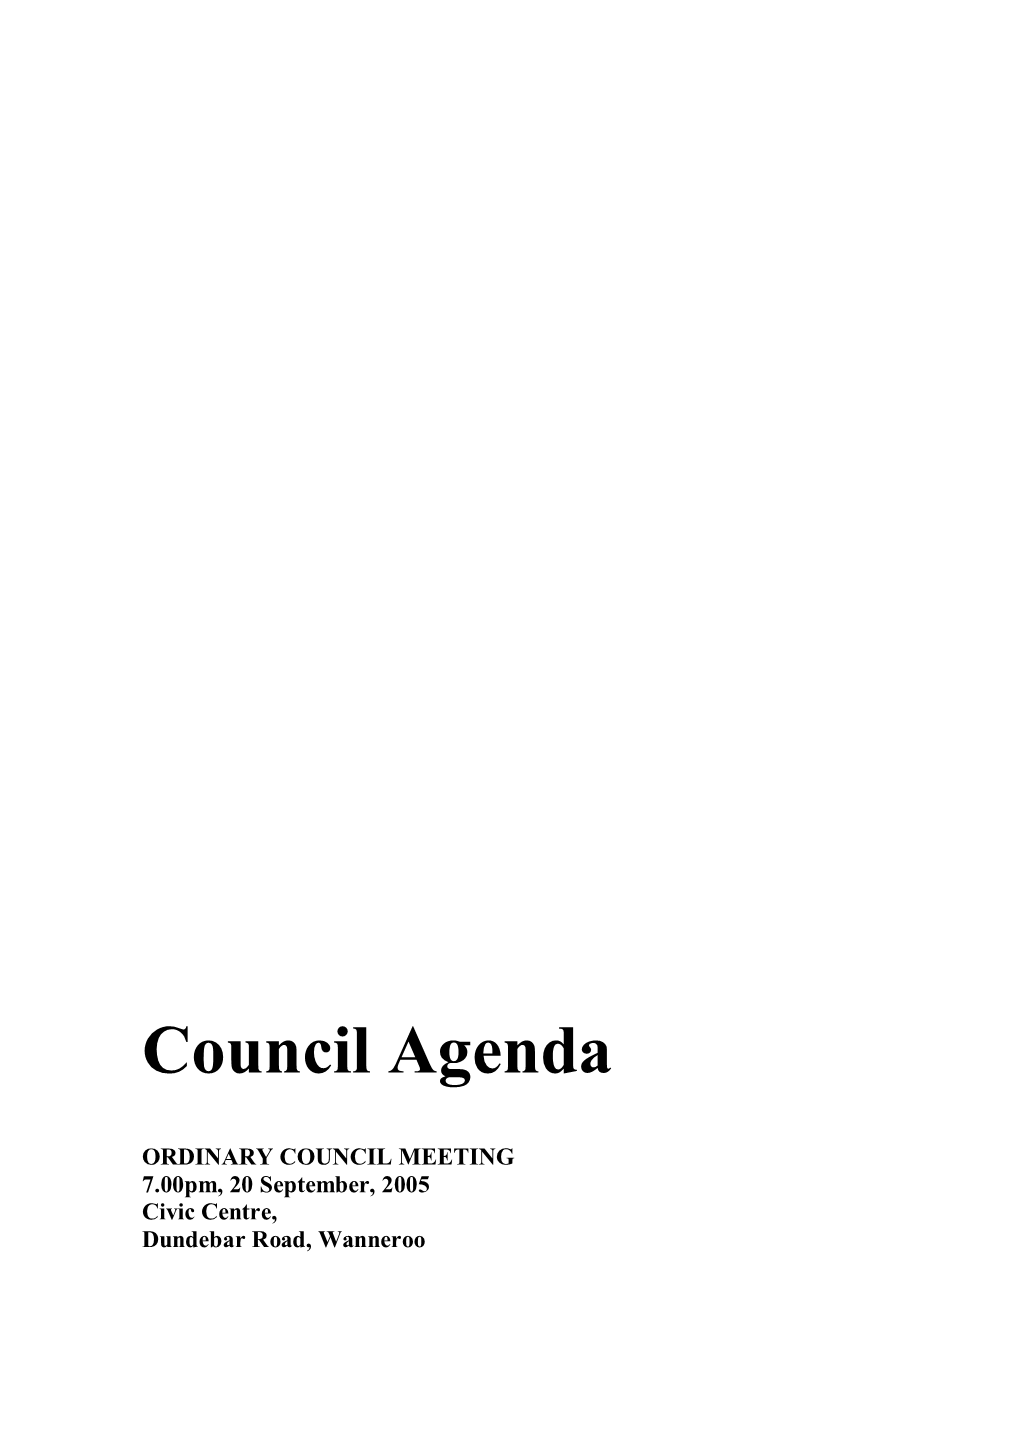 Council Agenda Management Software